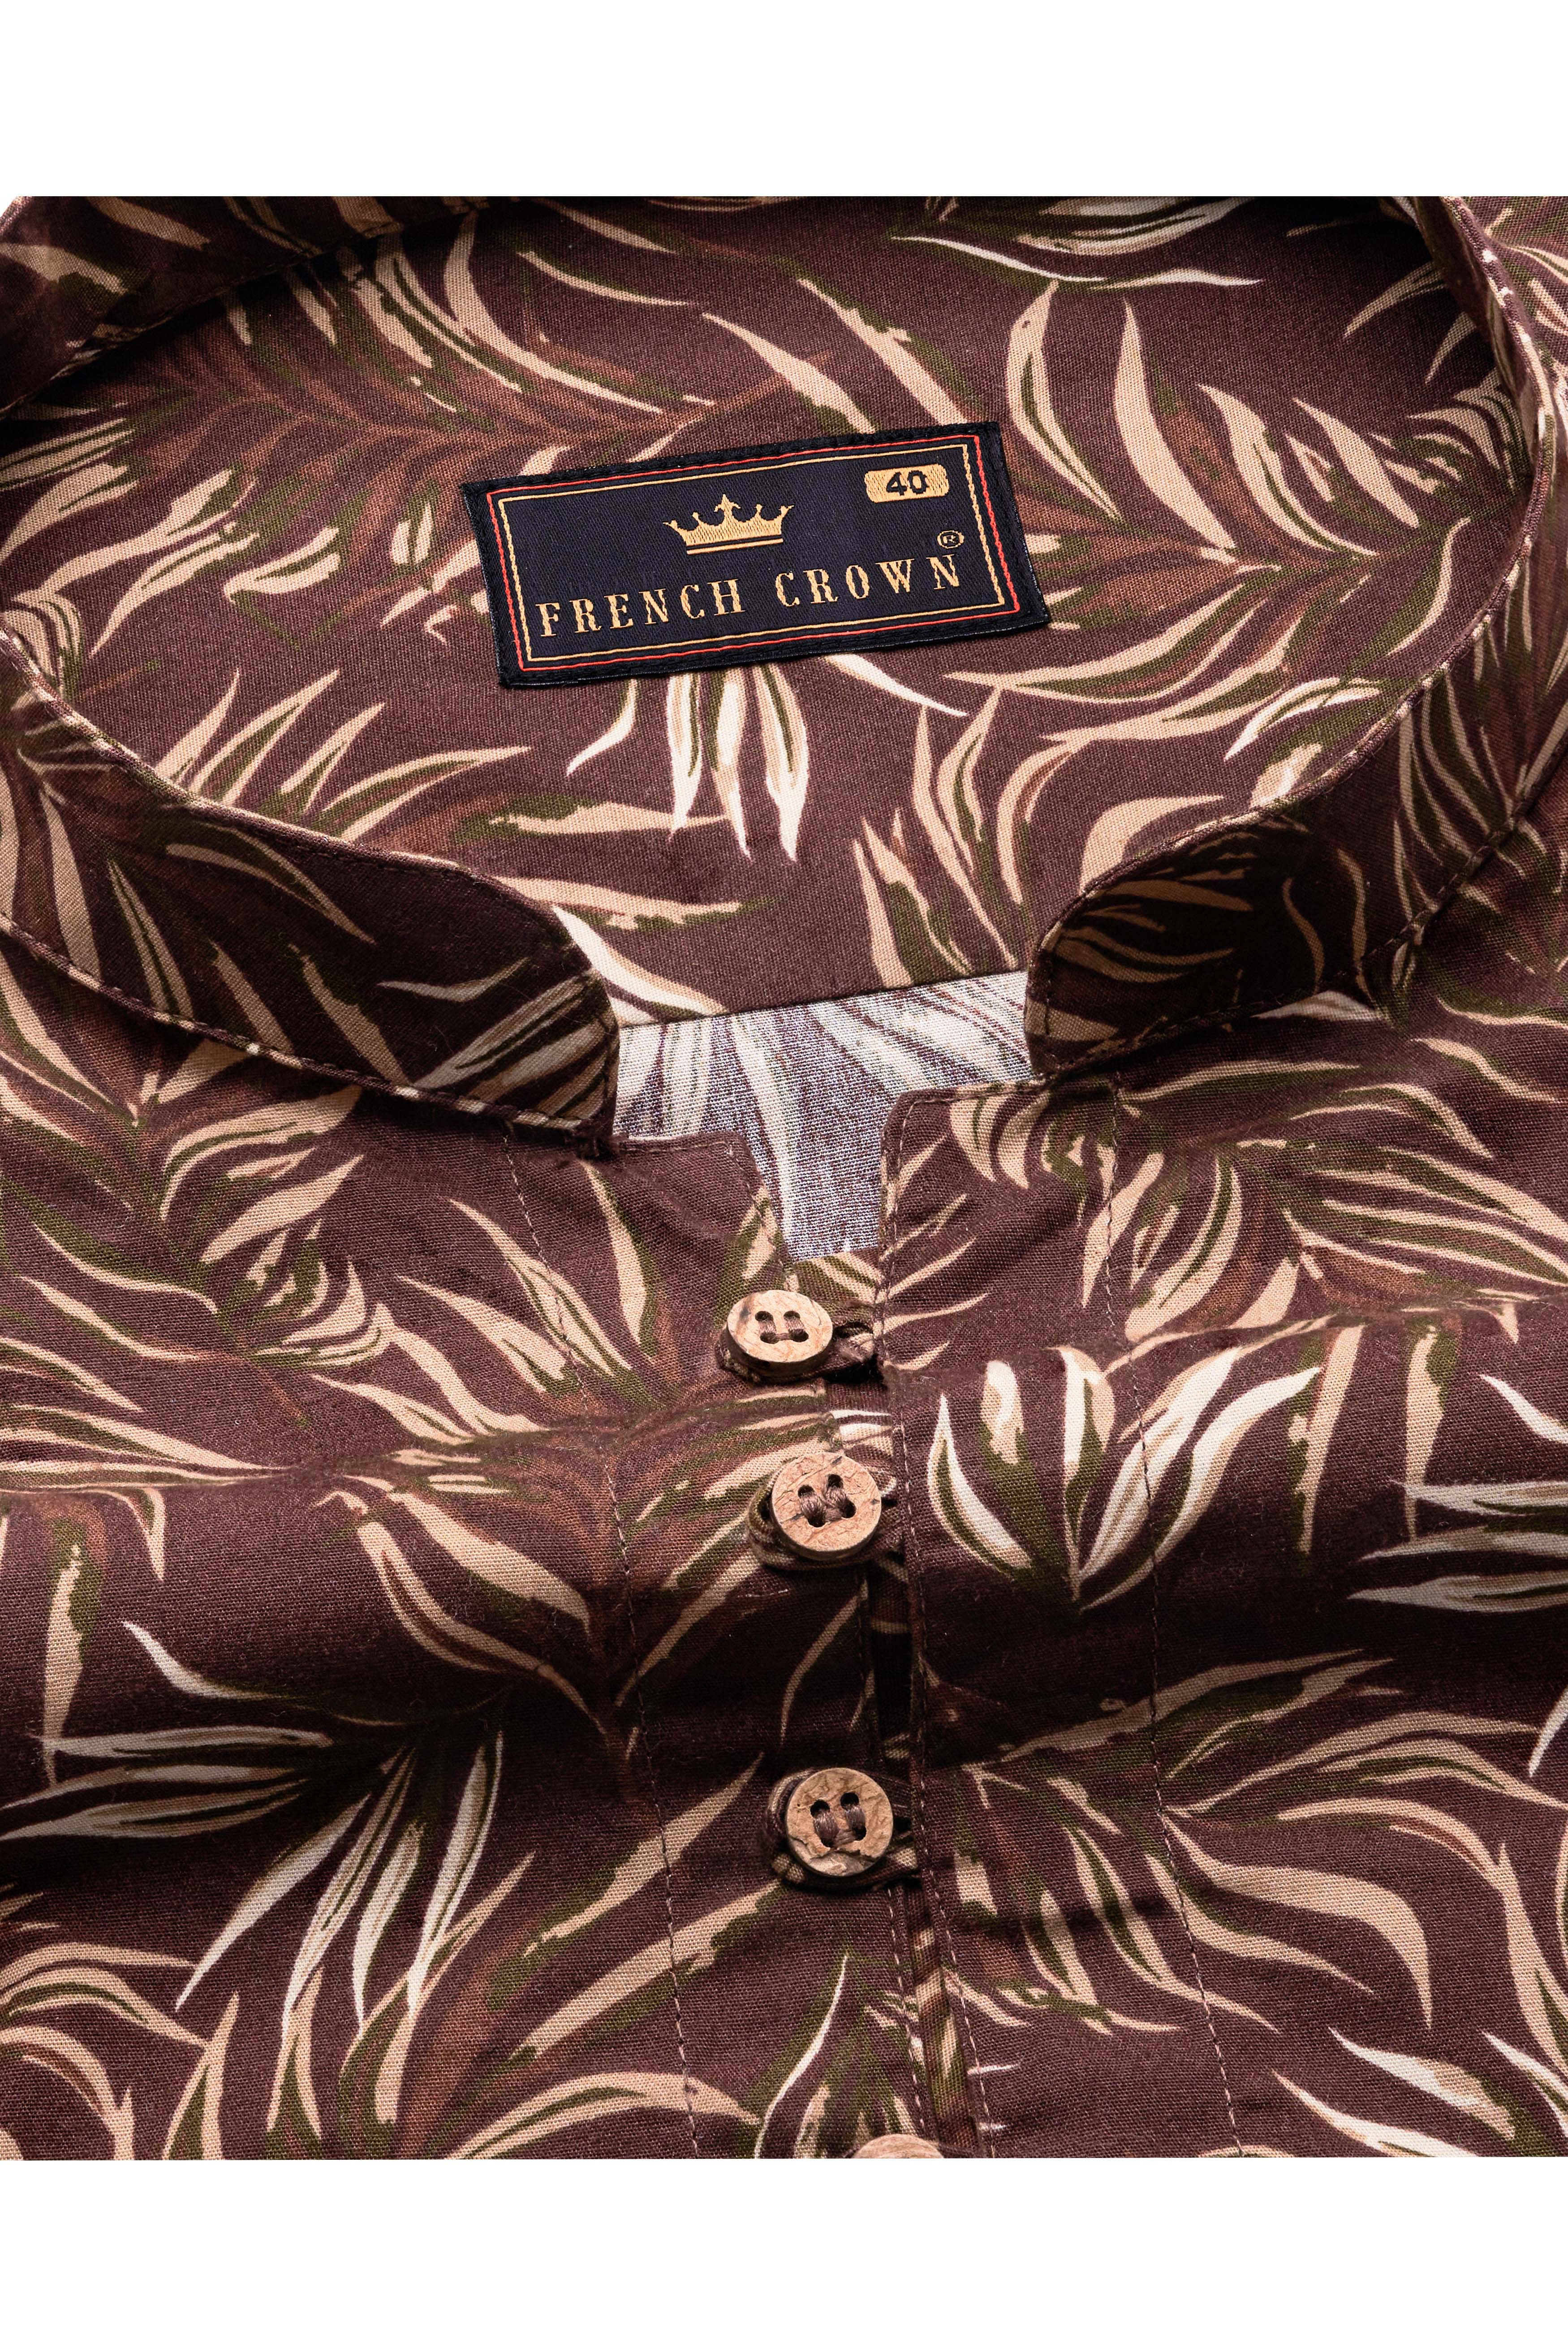 Bistre Brown Leaves Printed Twill Premium Cotton Kurta Shirt